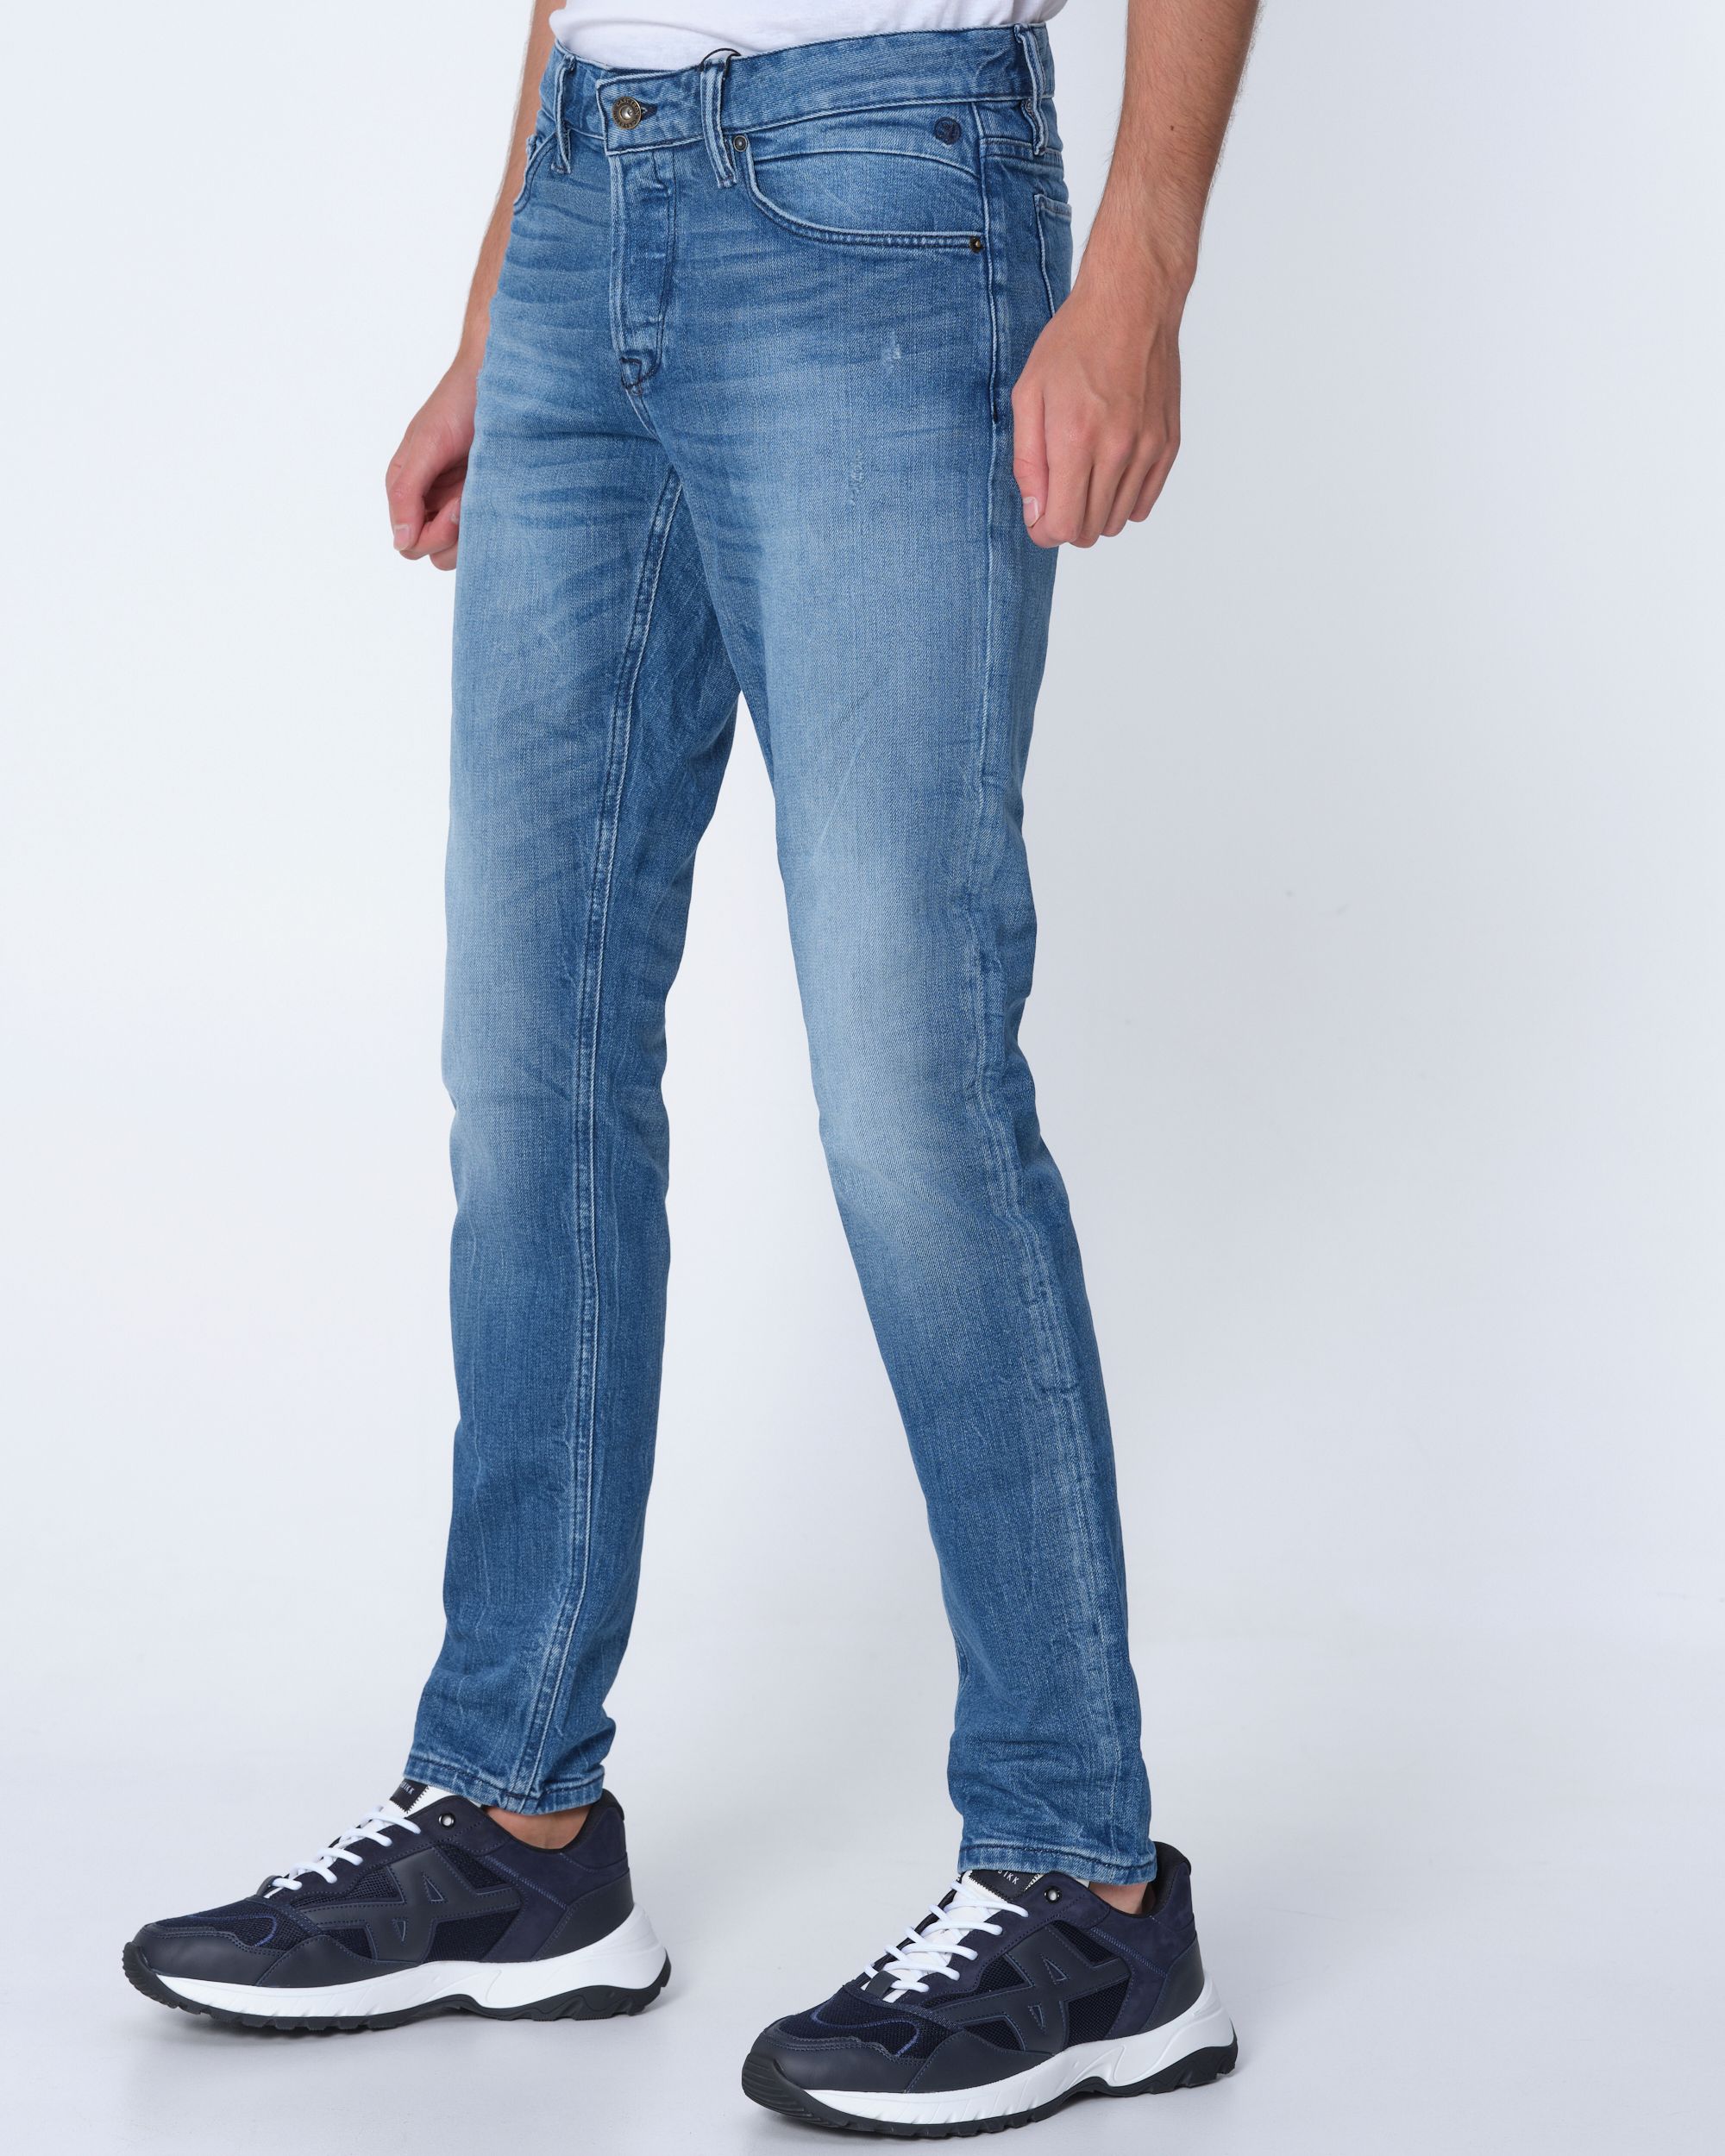 Cast Iron Riser Slim Fit Jeans Blauw 076210-001-28/30